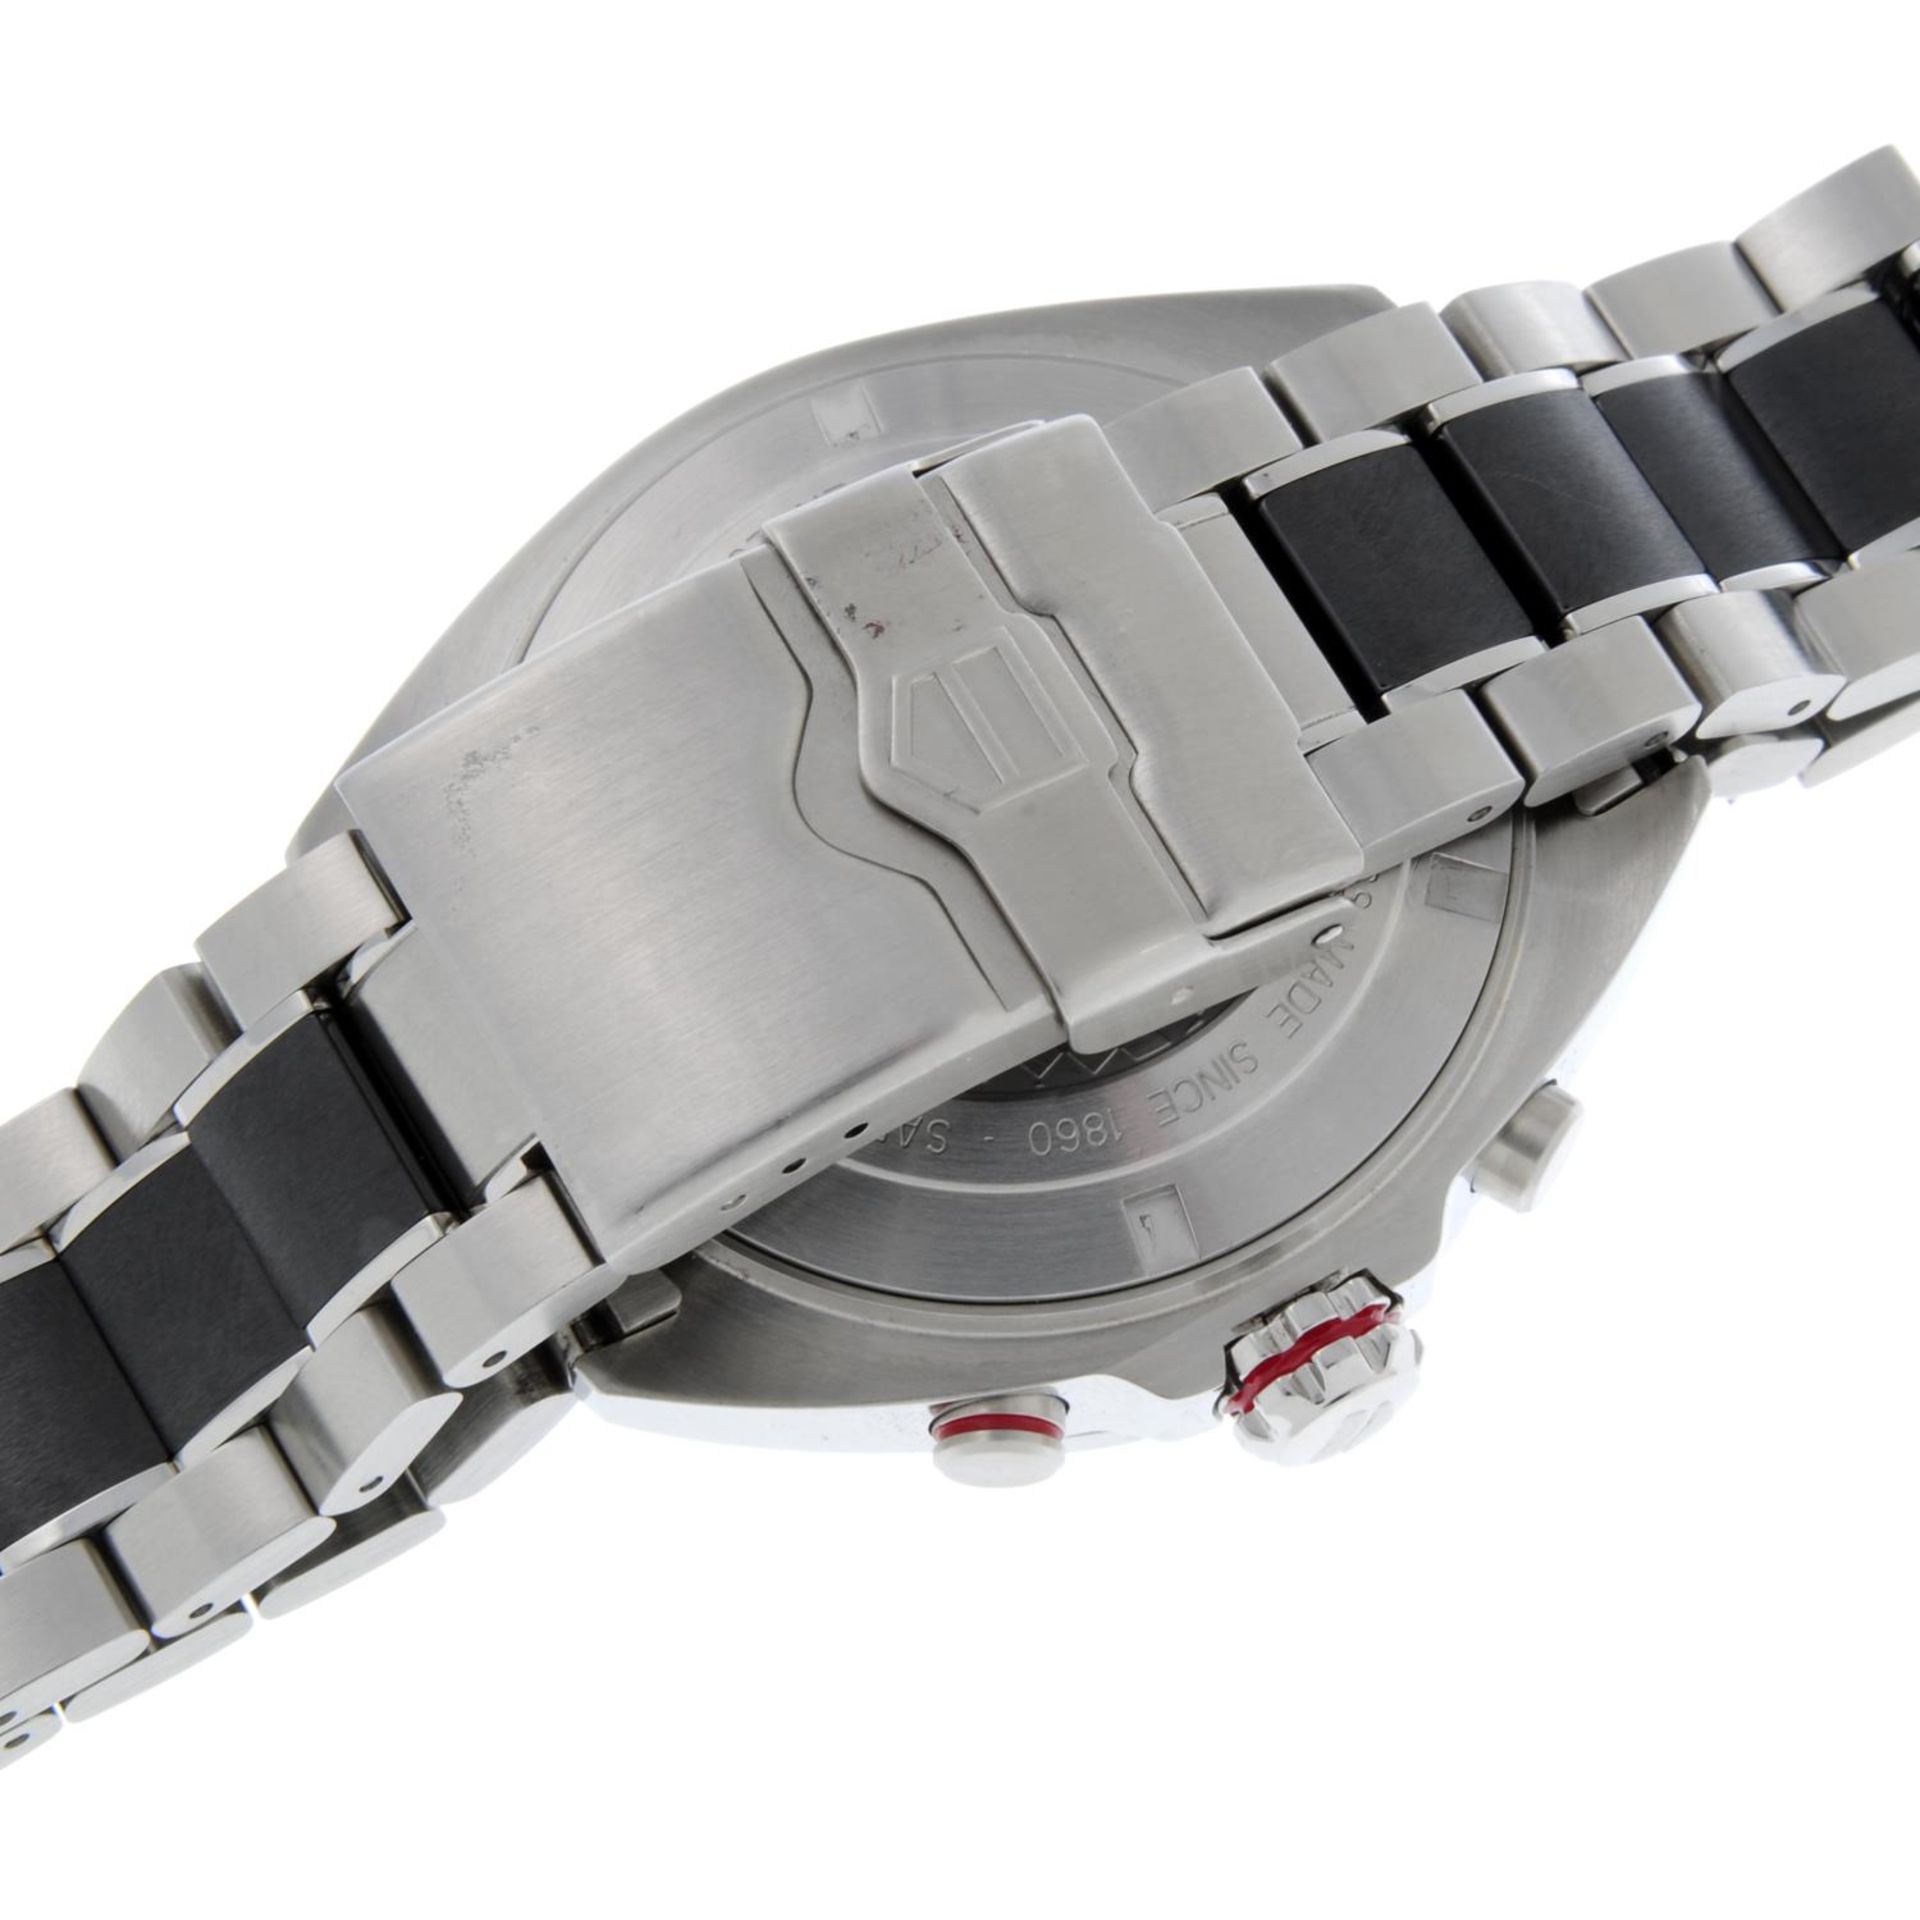 TAG HEUER - a Formula 1 chronographbracelet watch. - Image 2 of 4